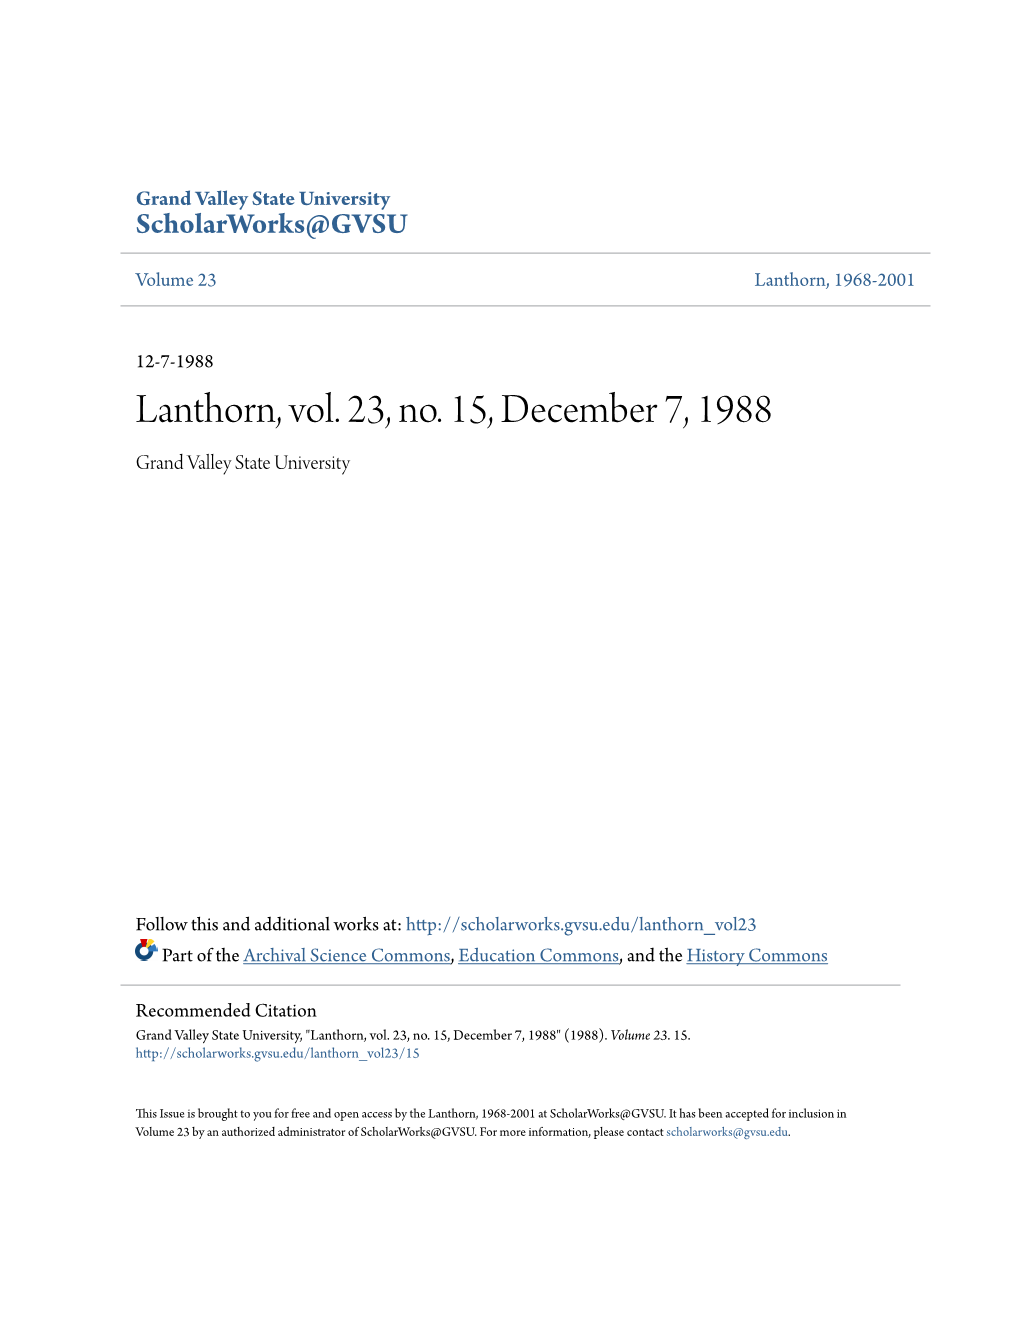 Lanthorn, Vol. 23, No. 15, December 7, 1988 Grand Valley State University